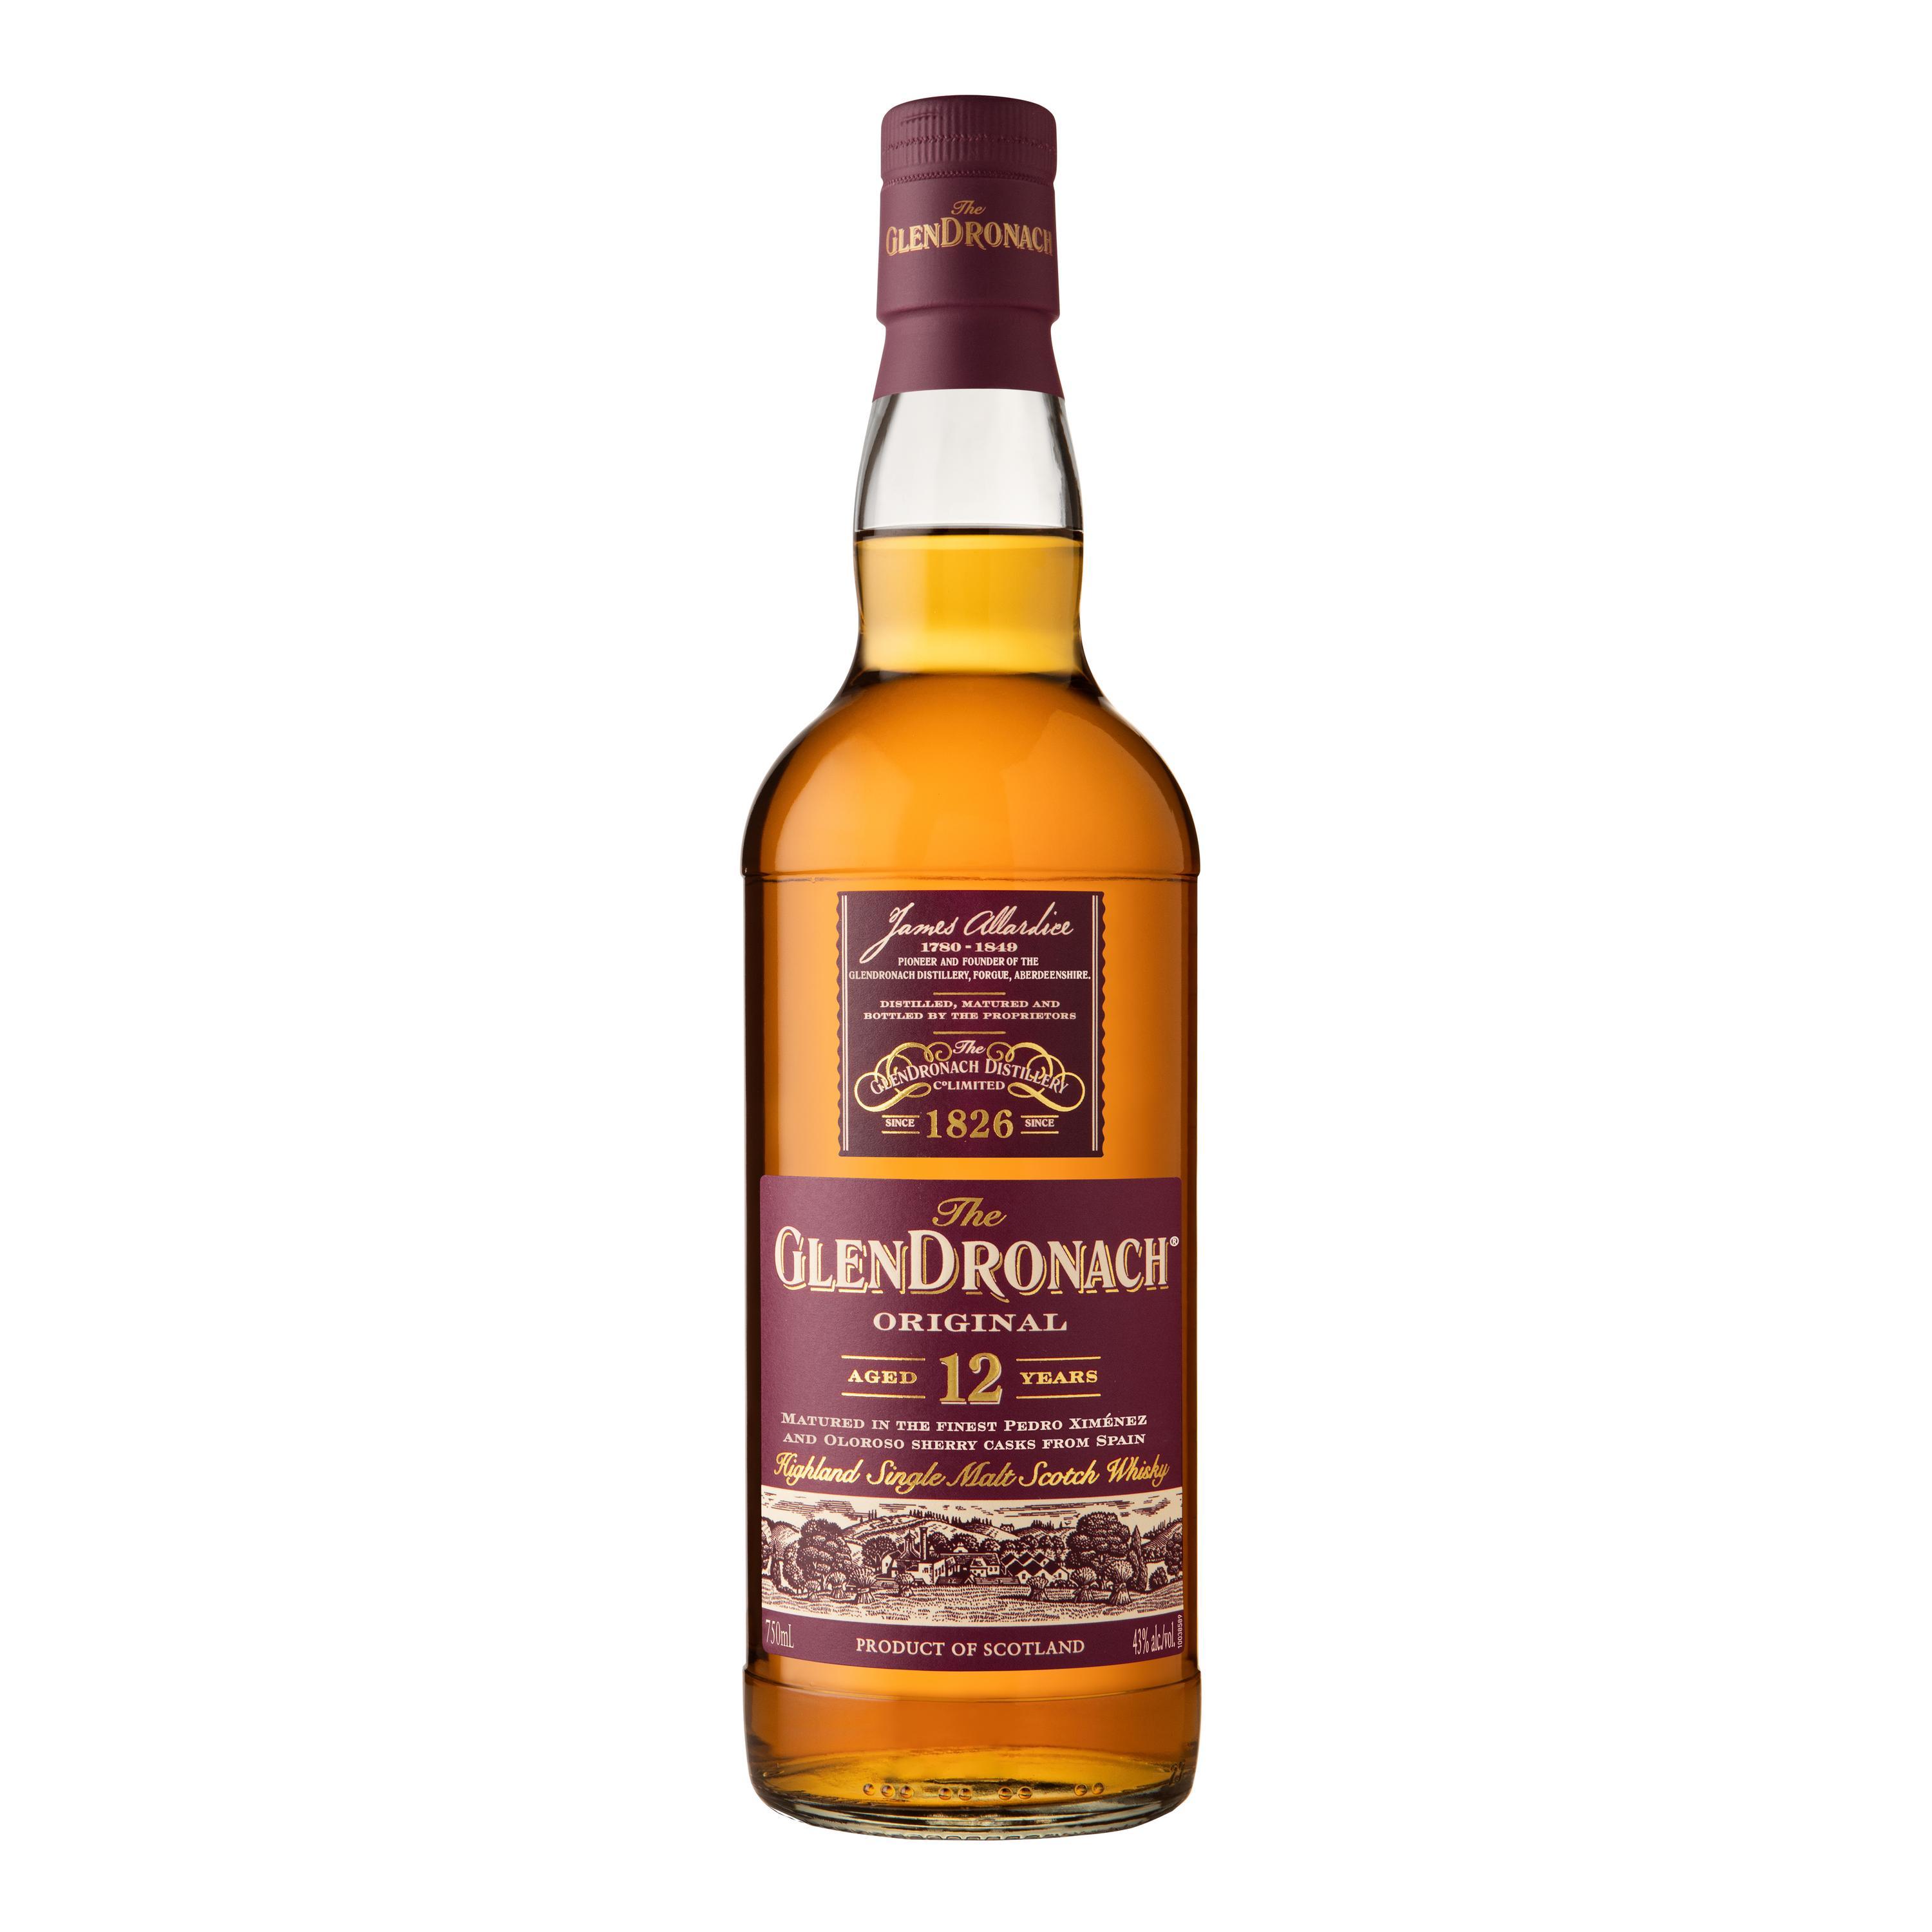 The GlenDronach Single Malt Scotch Whisky Original Aged 12 Years